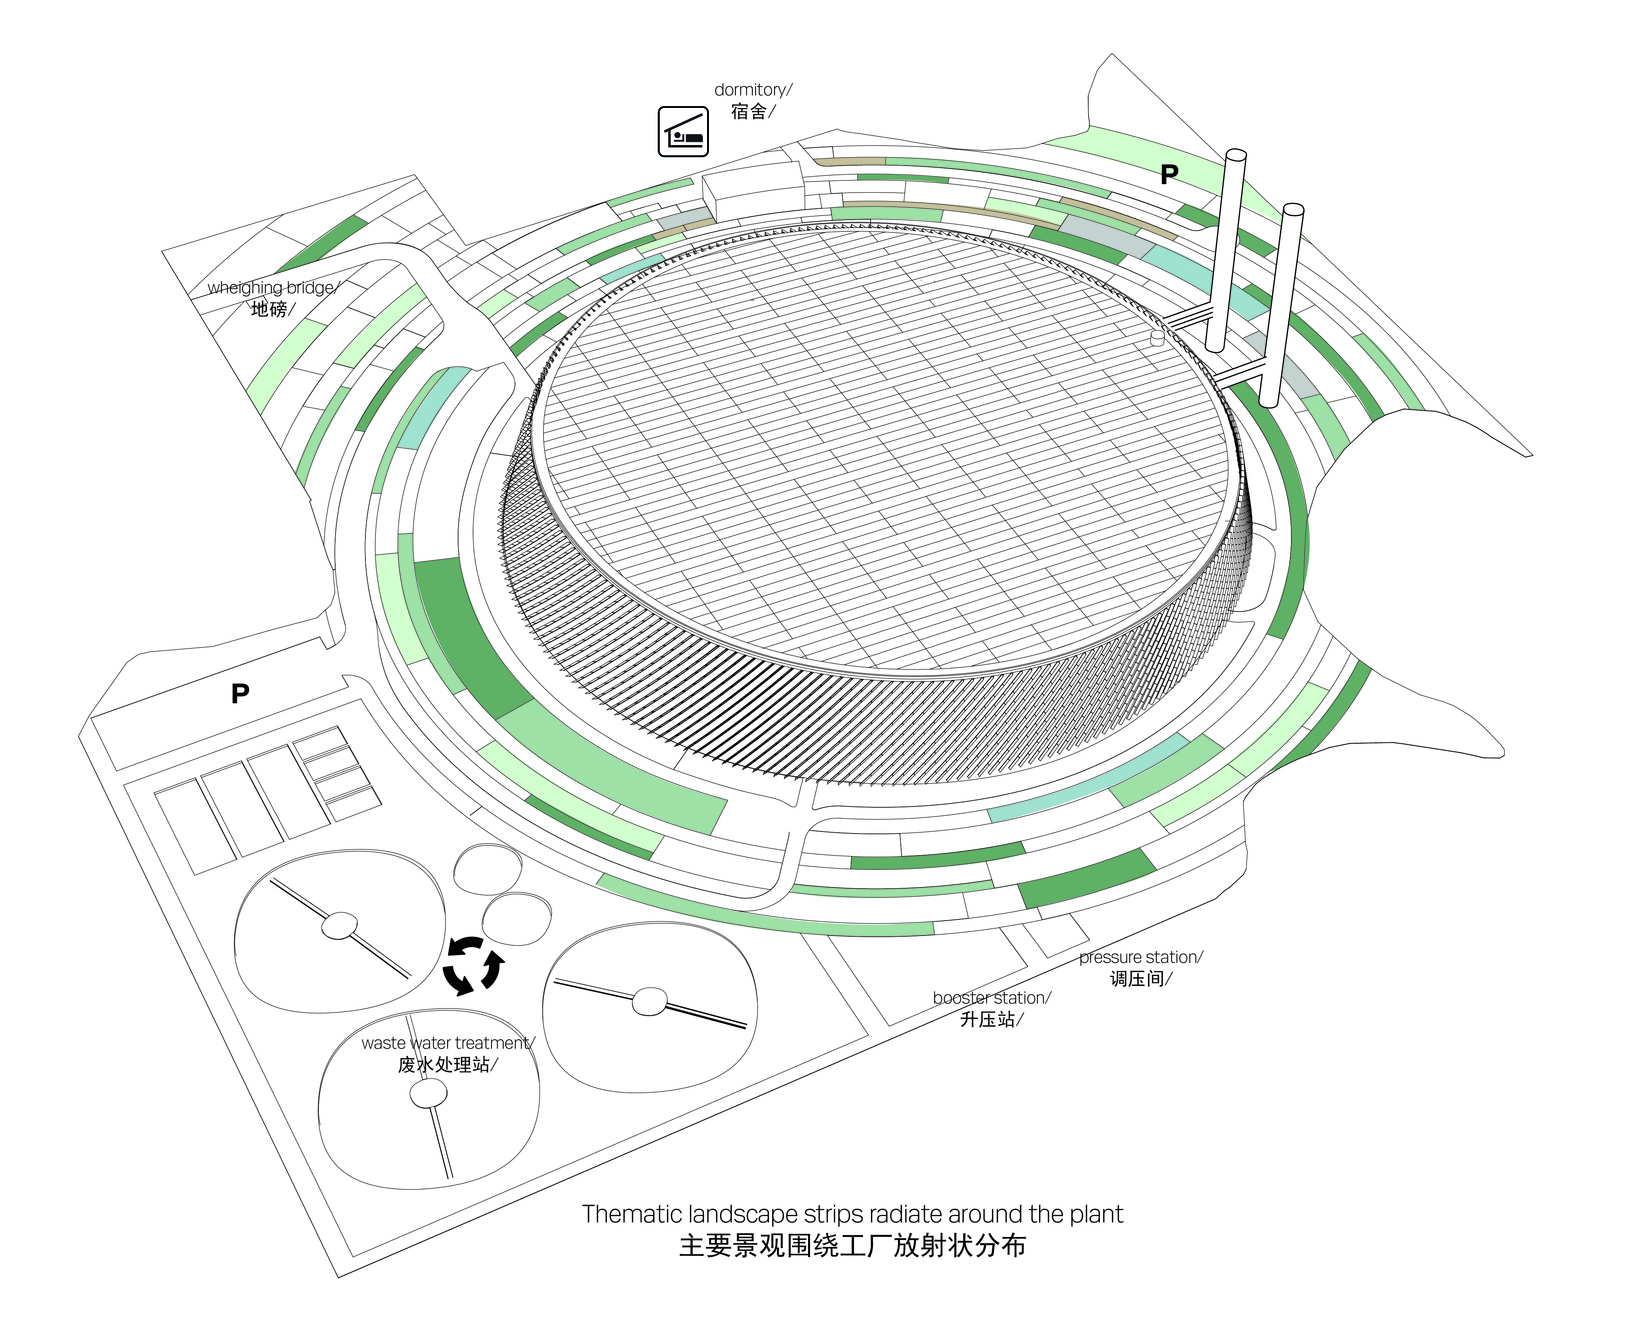 Shenzhen East Waste-to-Energy Plant. Image Courtesy of Schmidt Hammer Lassen and Gottlieb Paludan